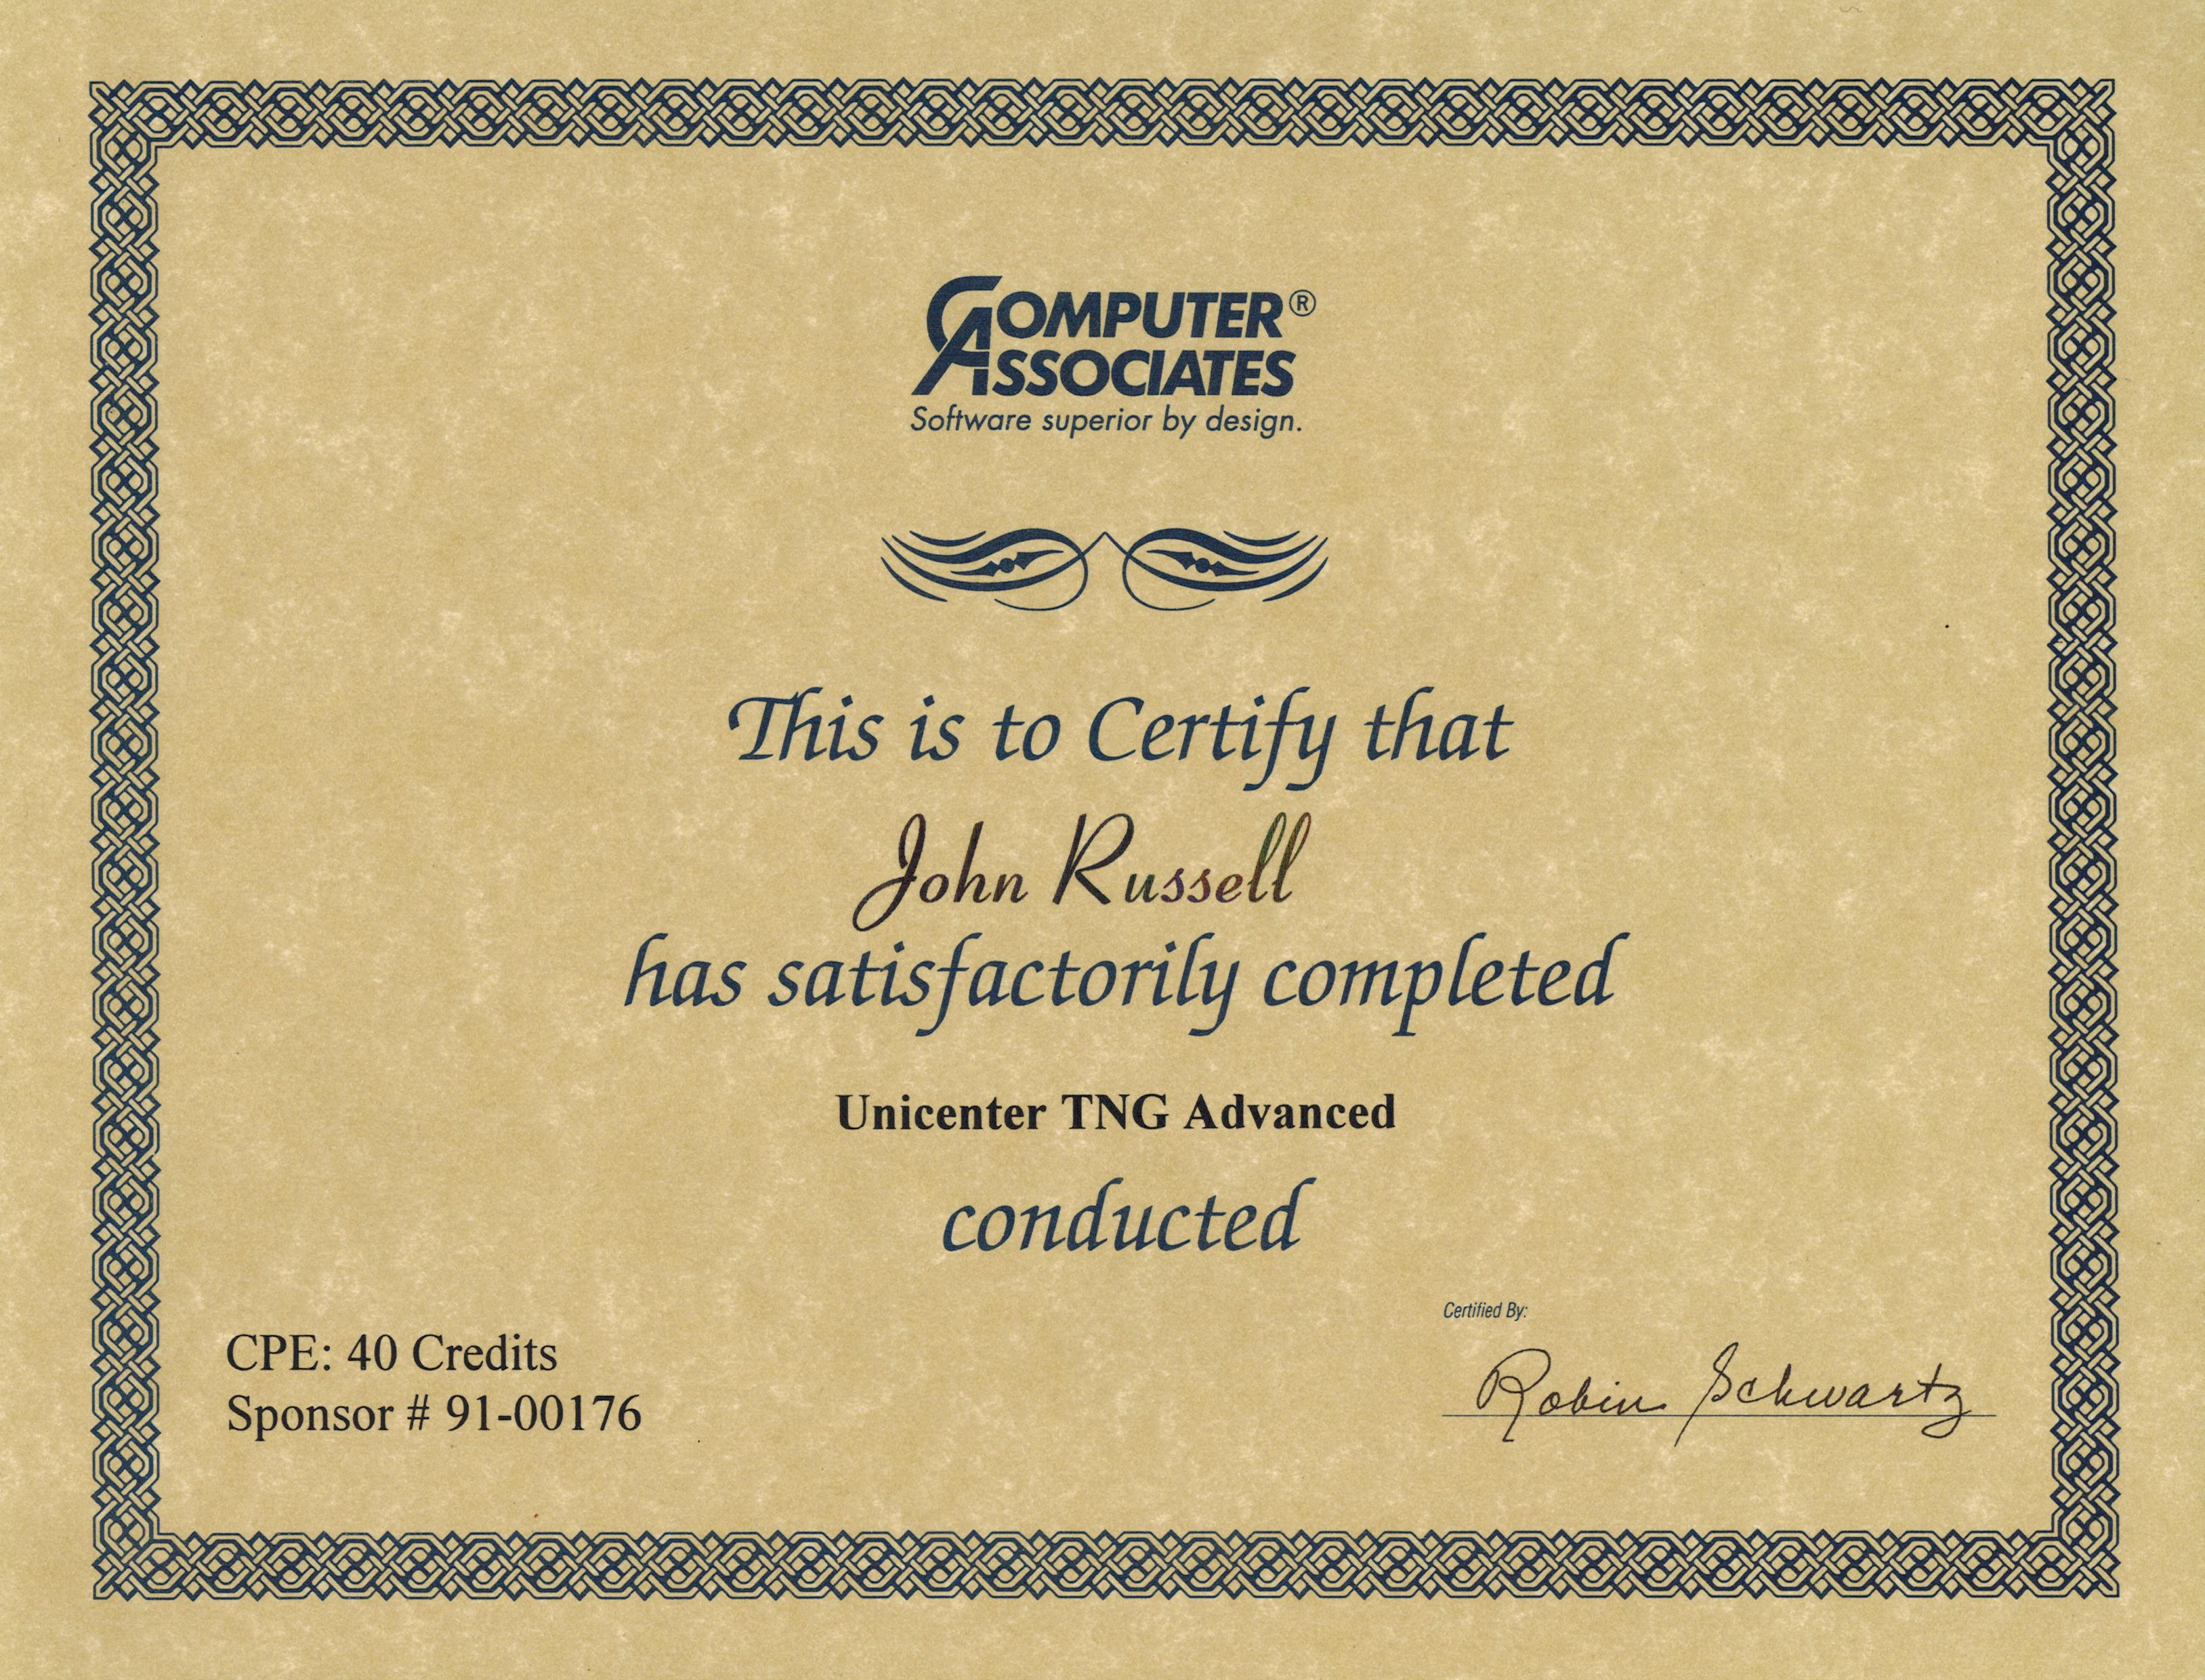 Certificate image